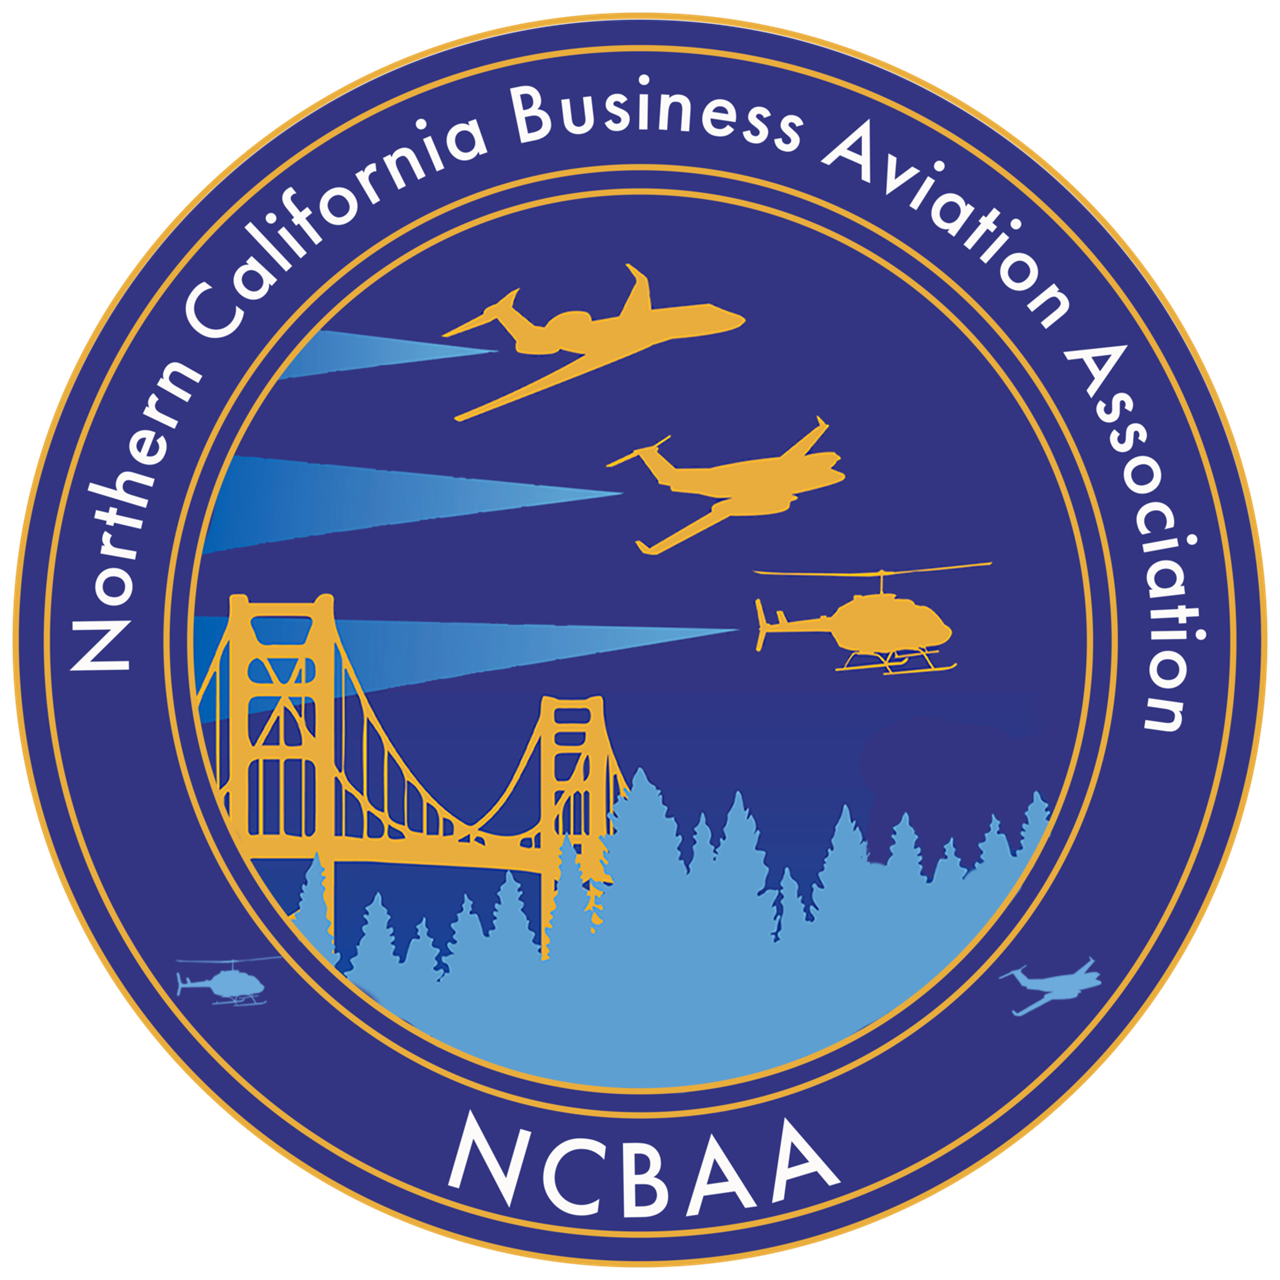 Northern California Business Aviation Association - NCBAA